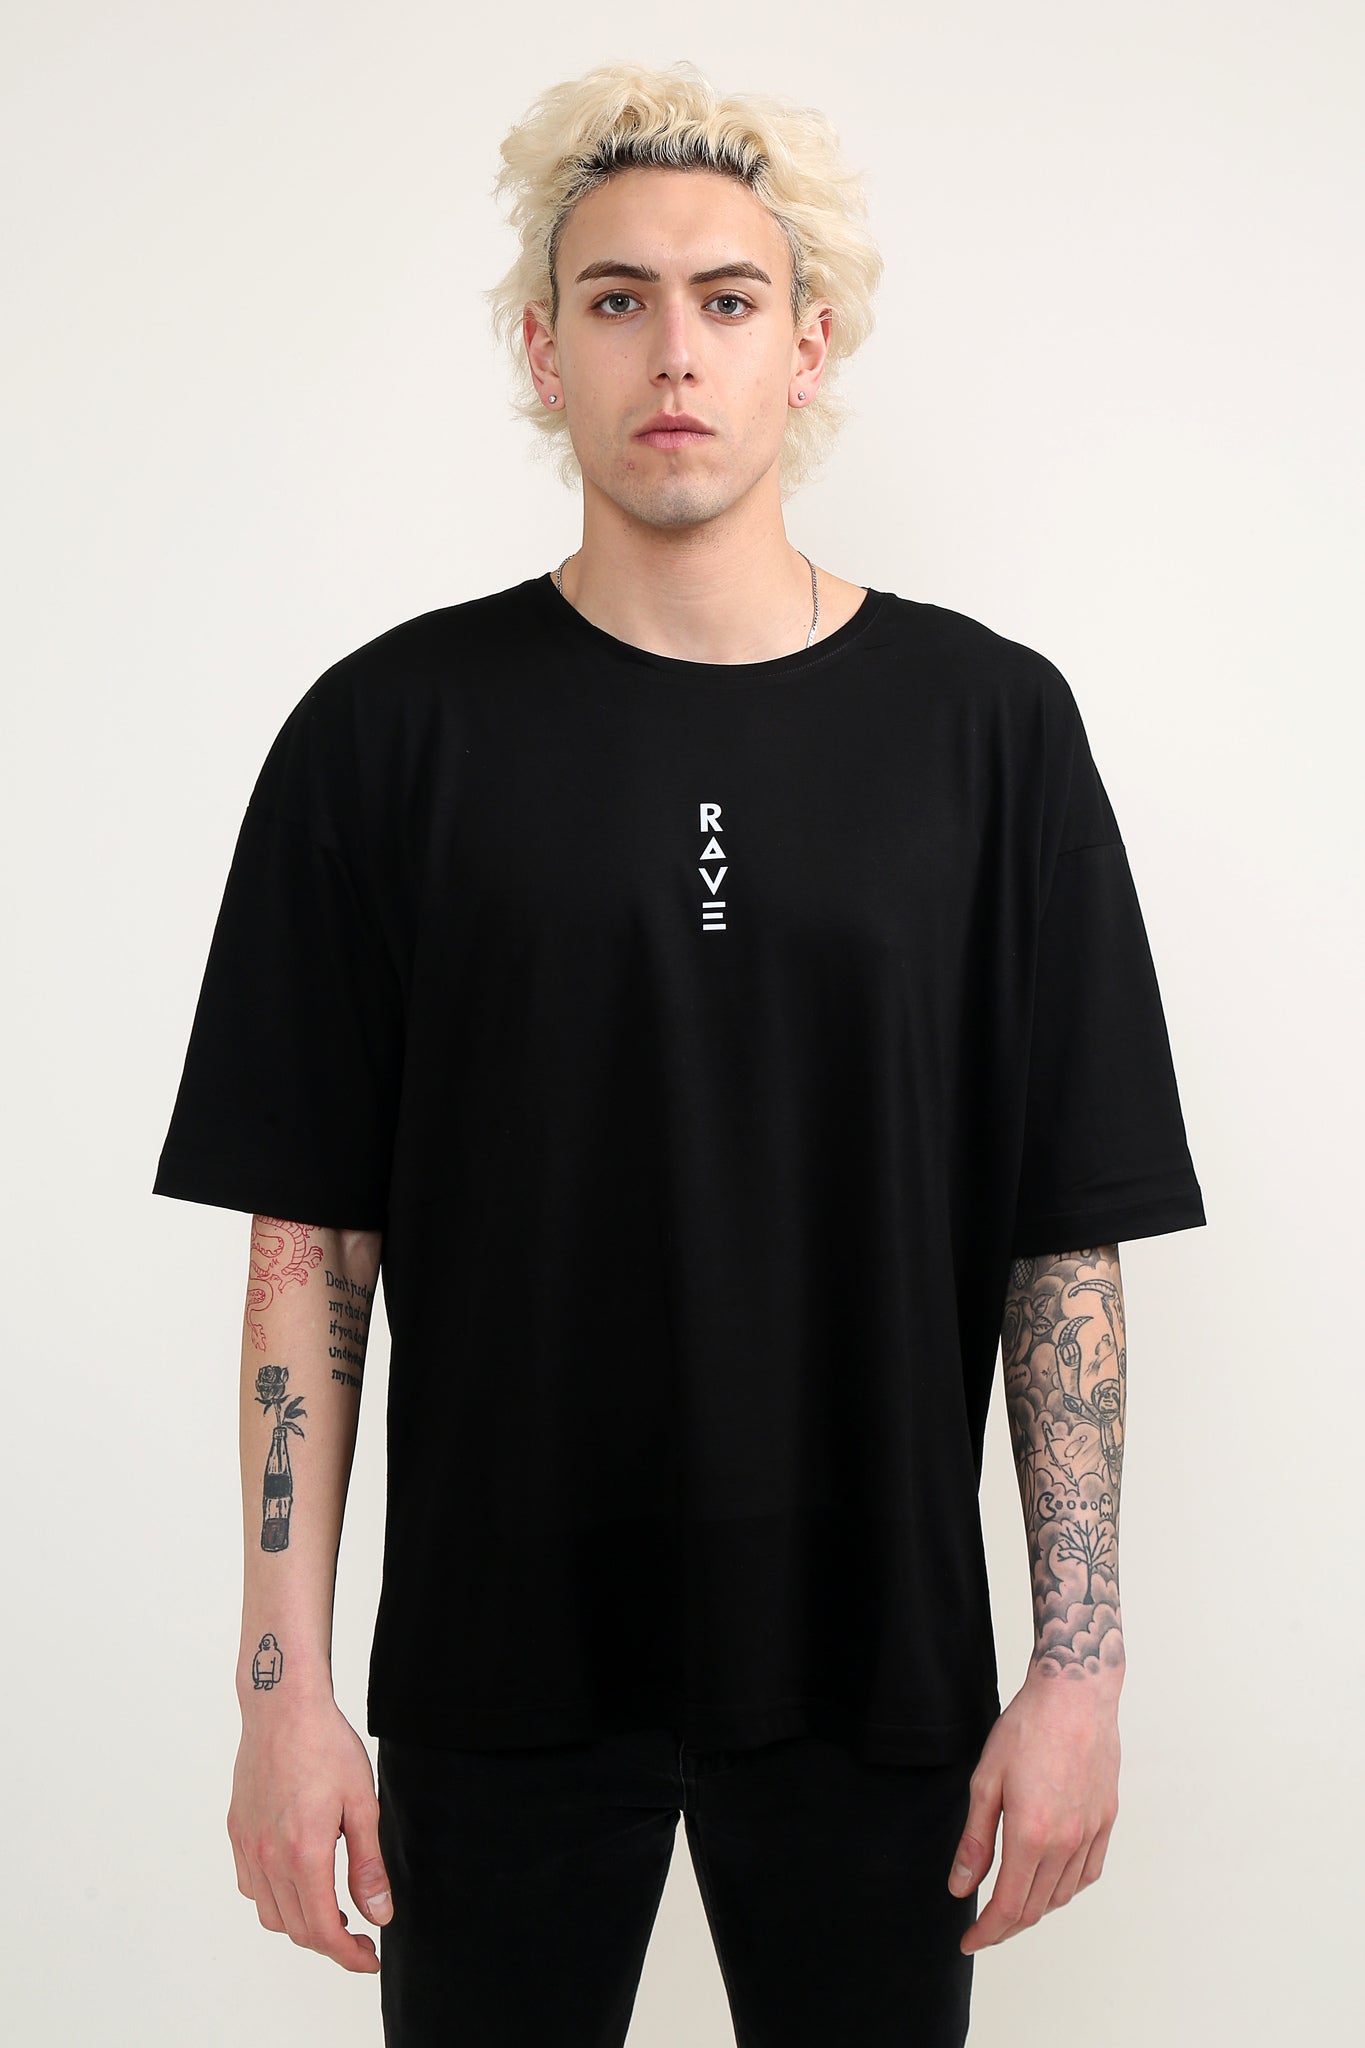 The R.A.V.E Oversize Siyah Reflektörlü T-Shirt